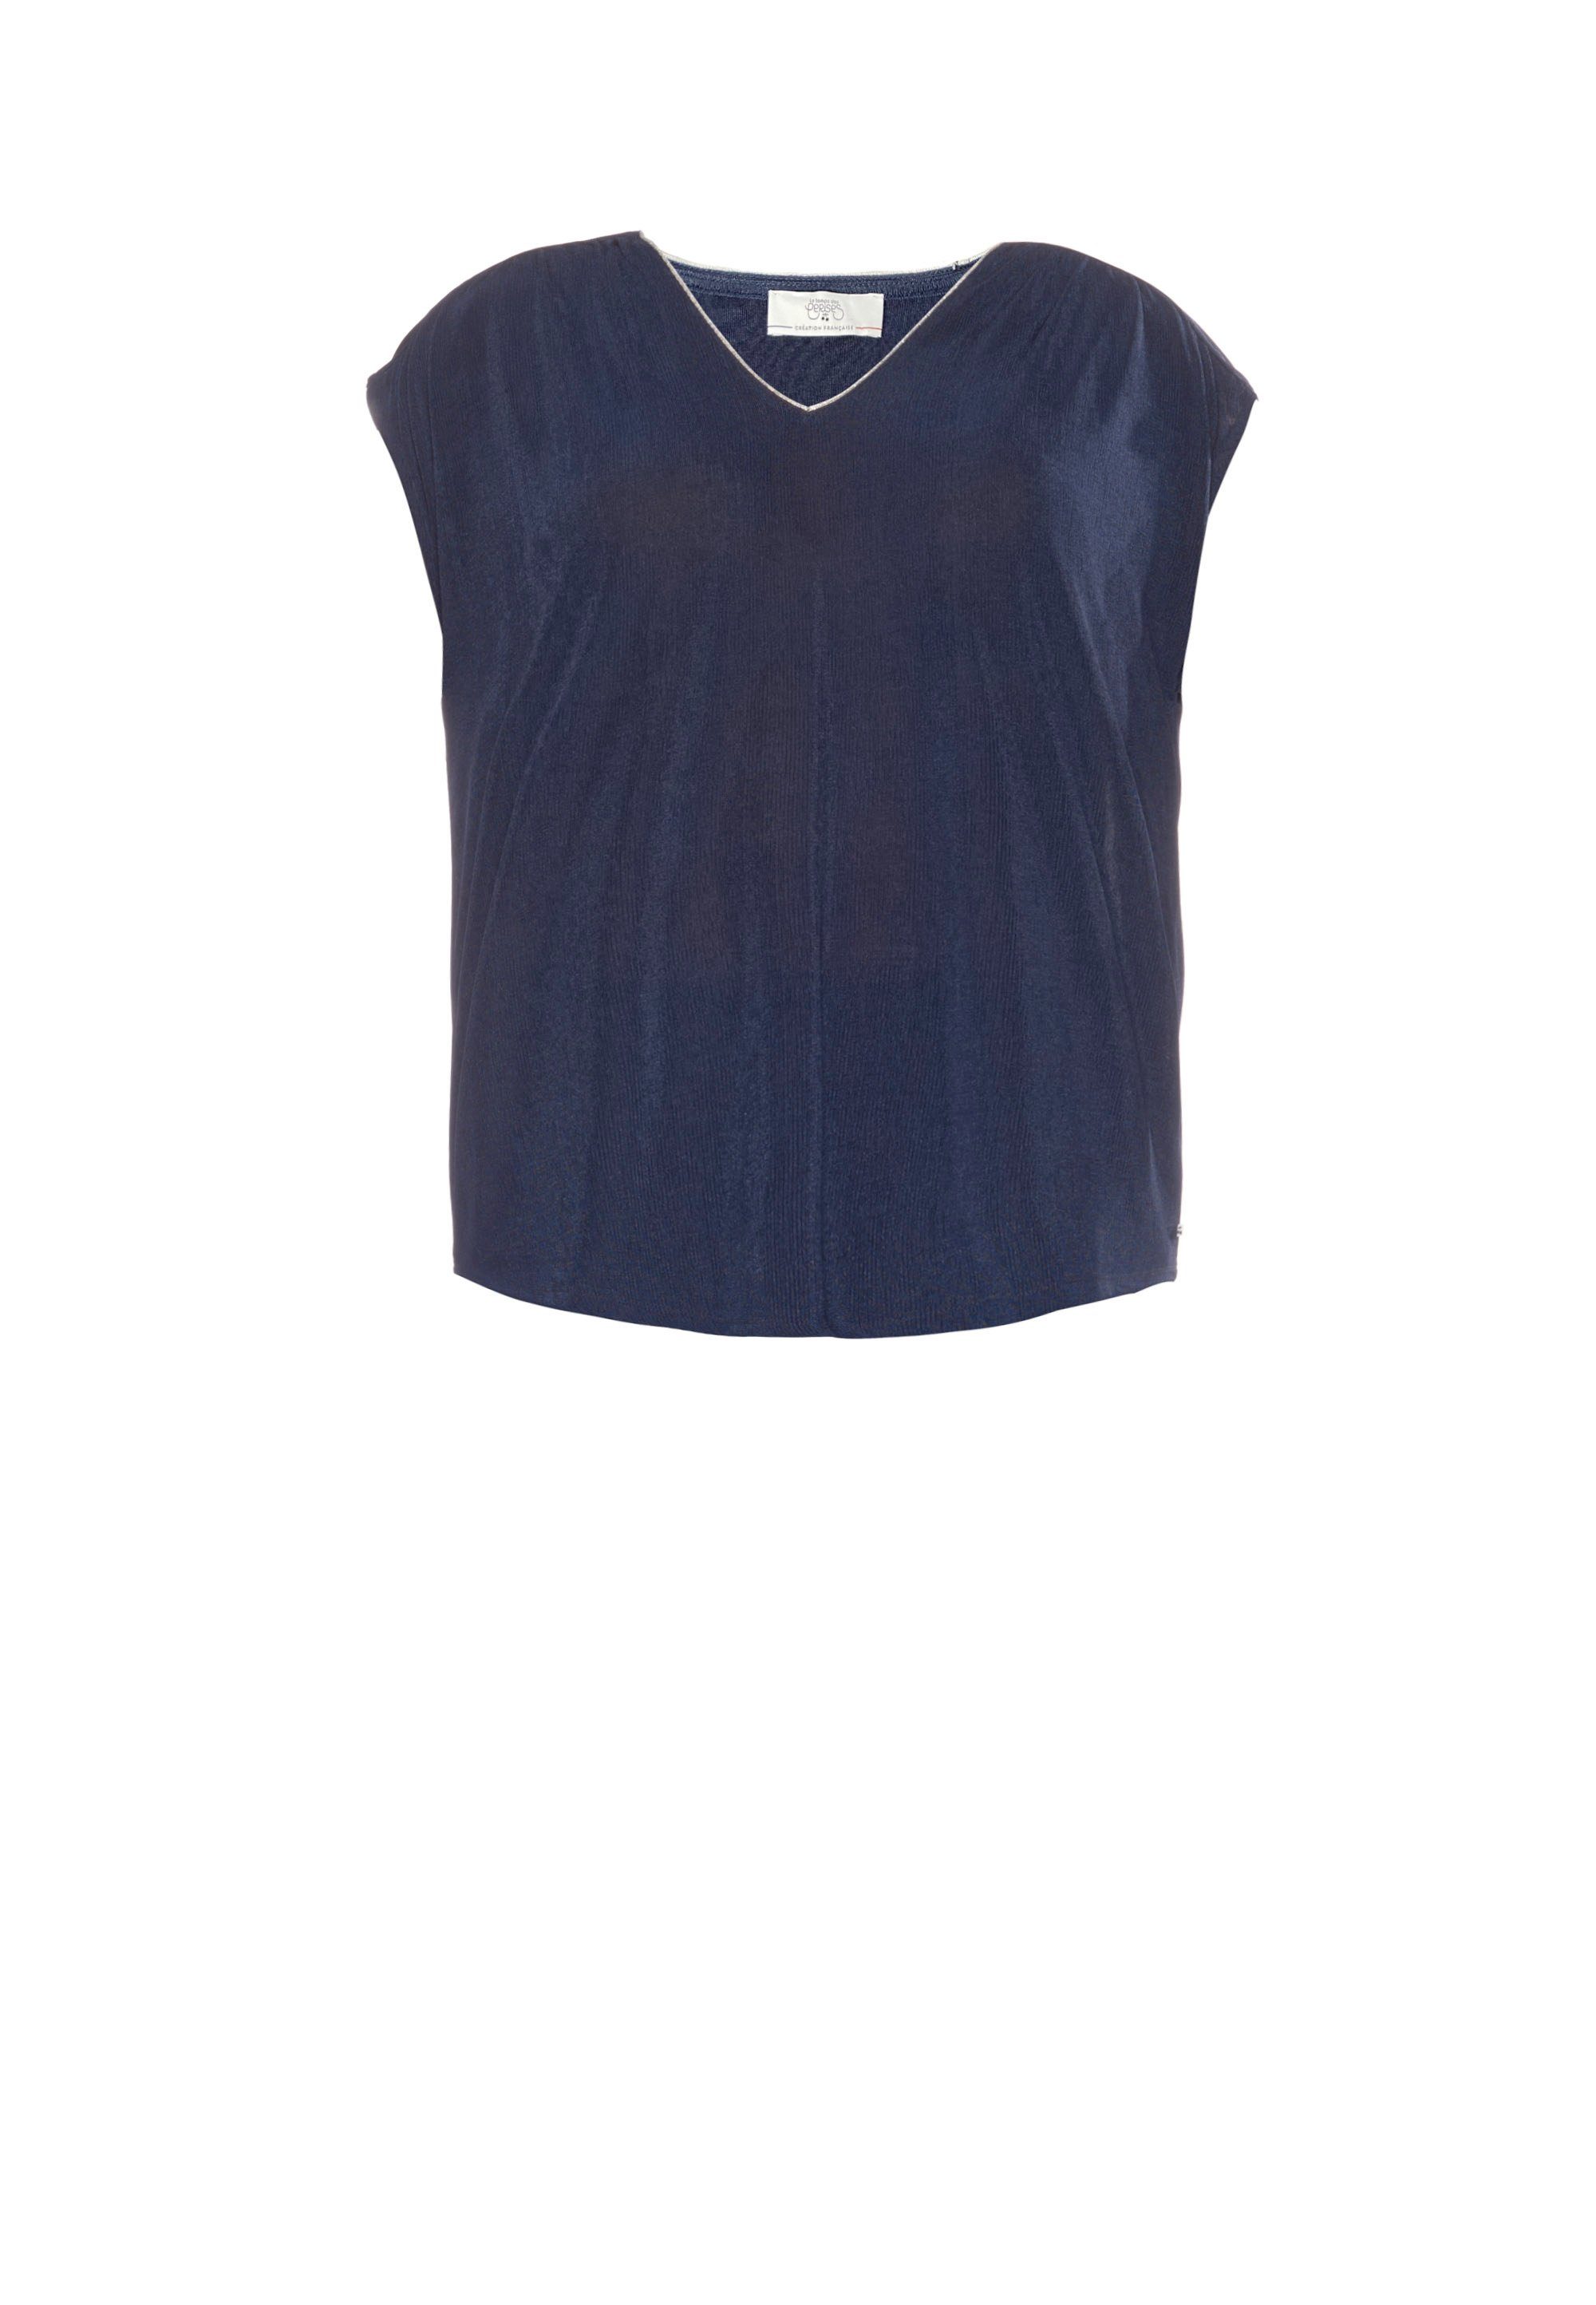 Le Temps V-Ausschnitt Des T-Shirt blau-dunkelblau Cerises SIDY femininem TSHIRT mit